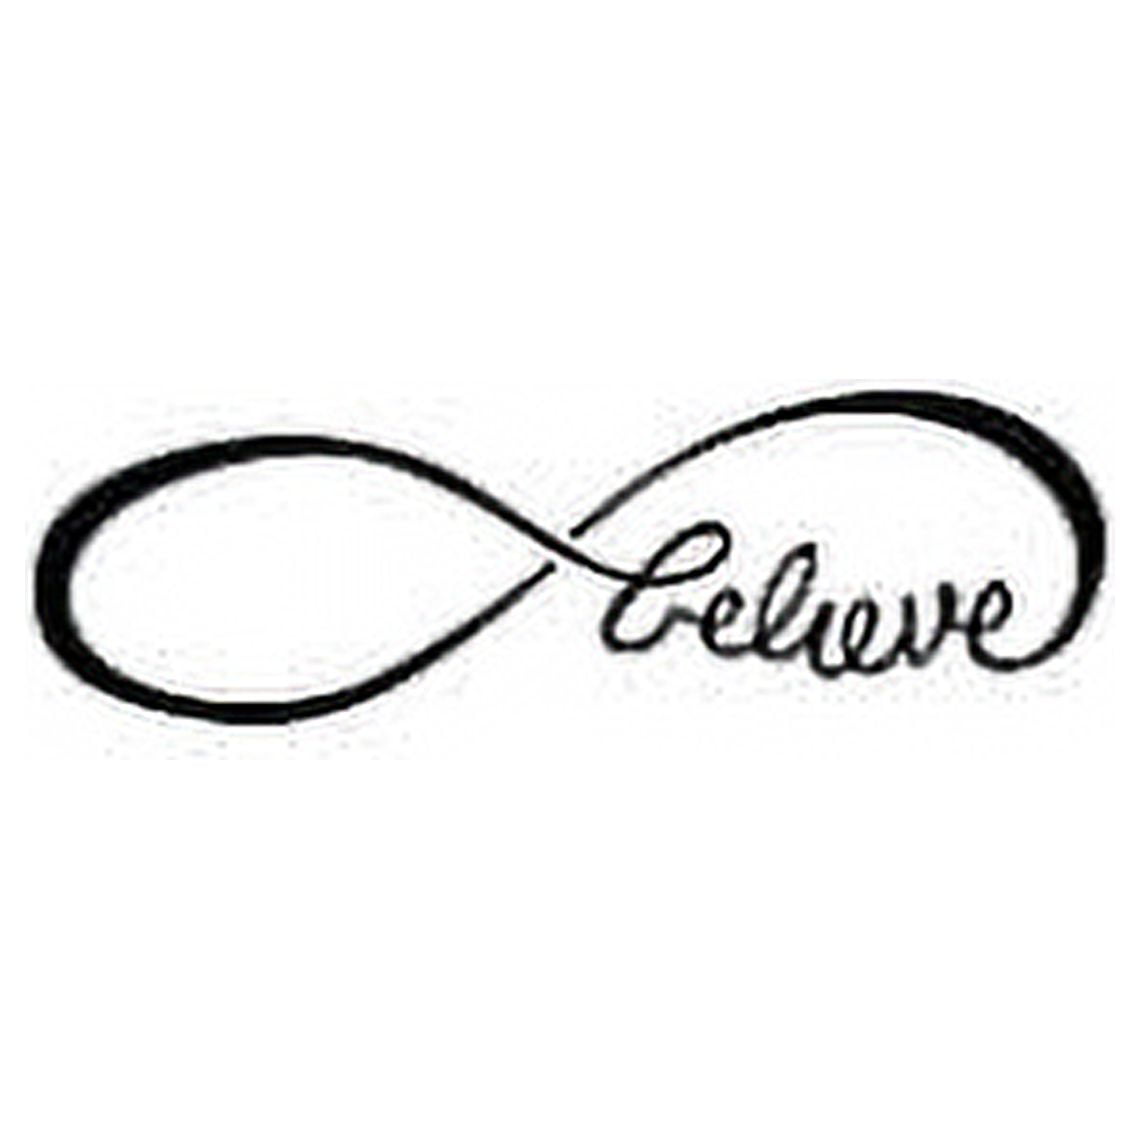 Believe tattoo #believetattoo “Believe” – SusanintheSC.com | Believe tattoos,  Faith tattoo designs, Wrist tattoos for women